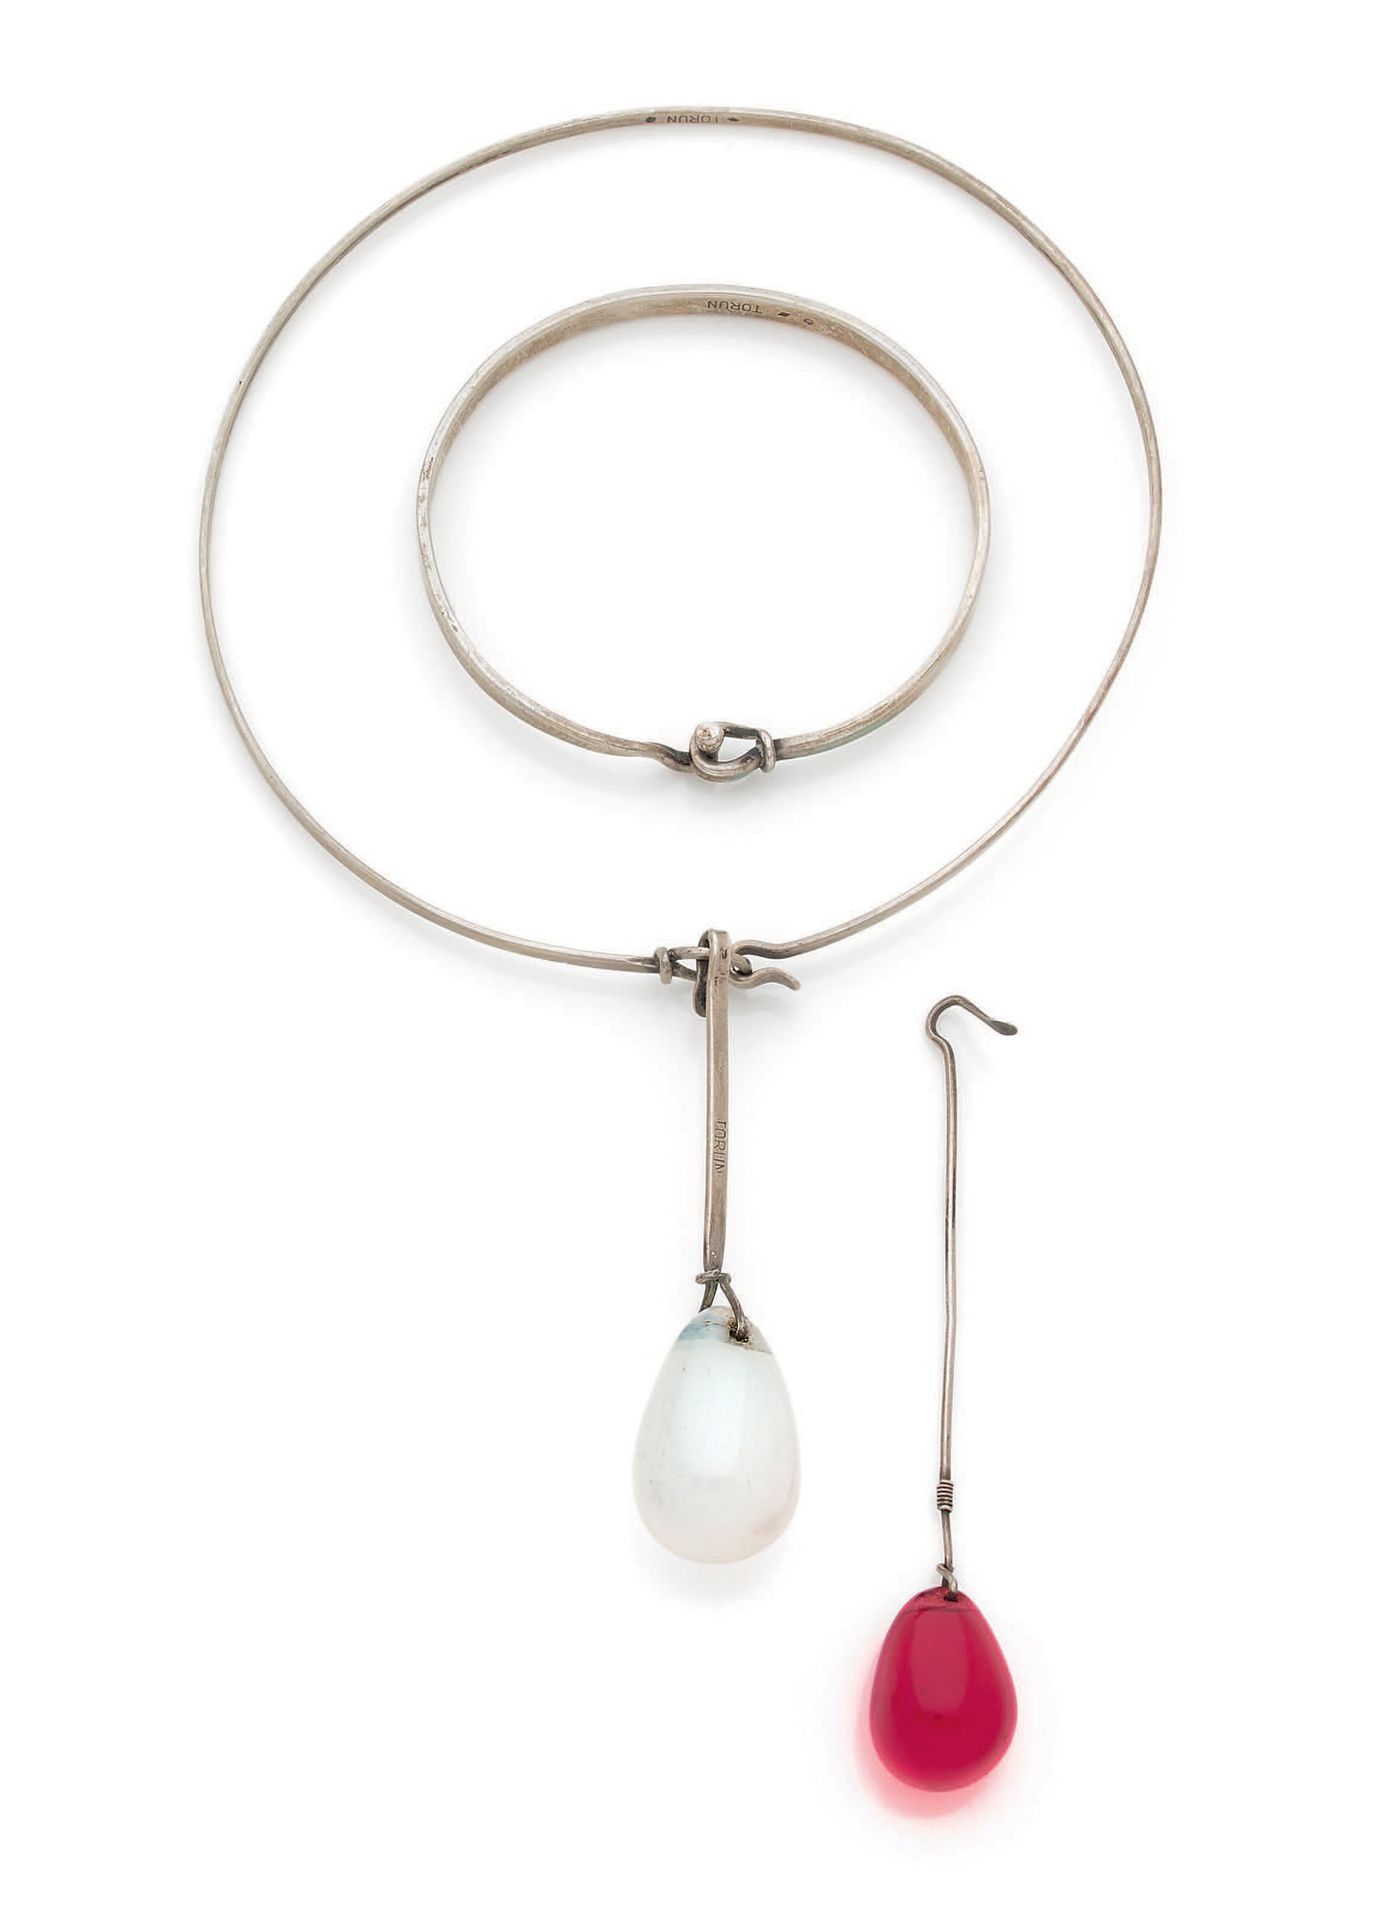 VIVIANNA TORUN. 
一套银制(925)半成品，包括一条装有乳白色玻璃珠吊坠的扭矩项链和一条手链。
包括一个可替换的红色玻璃膏吊坠。
总重量：47.&hellip;